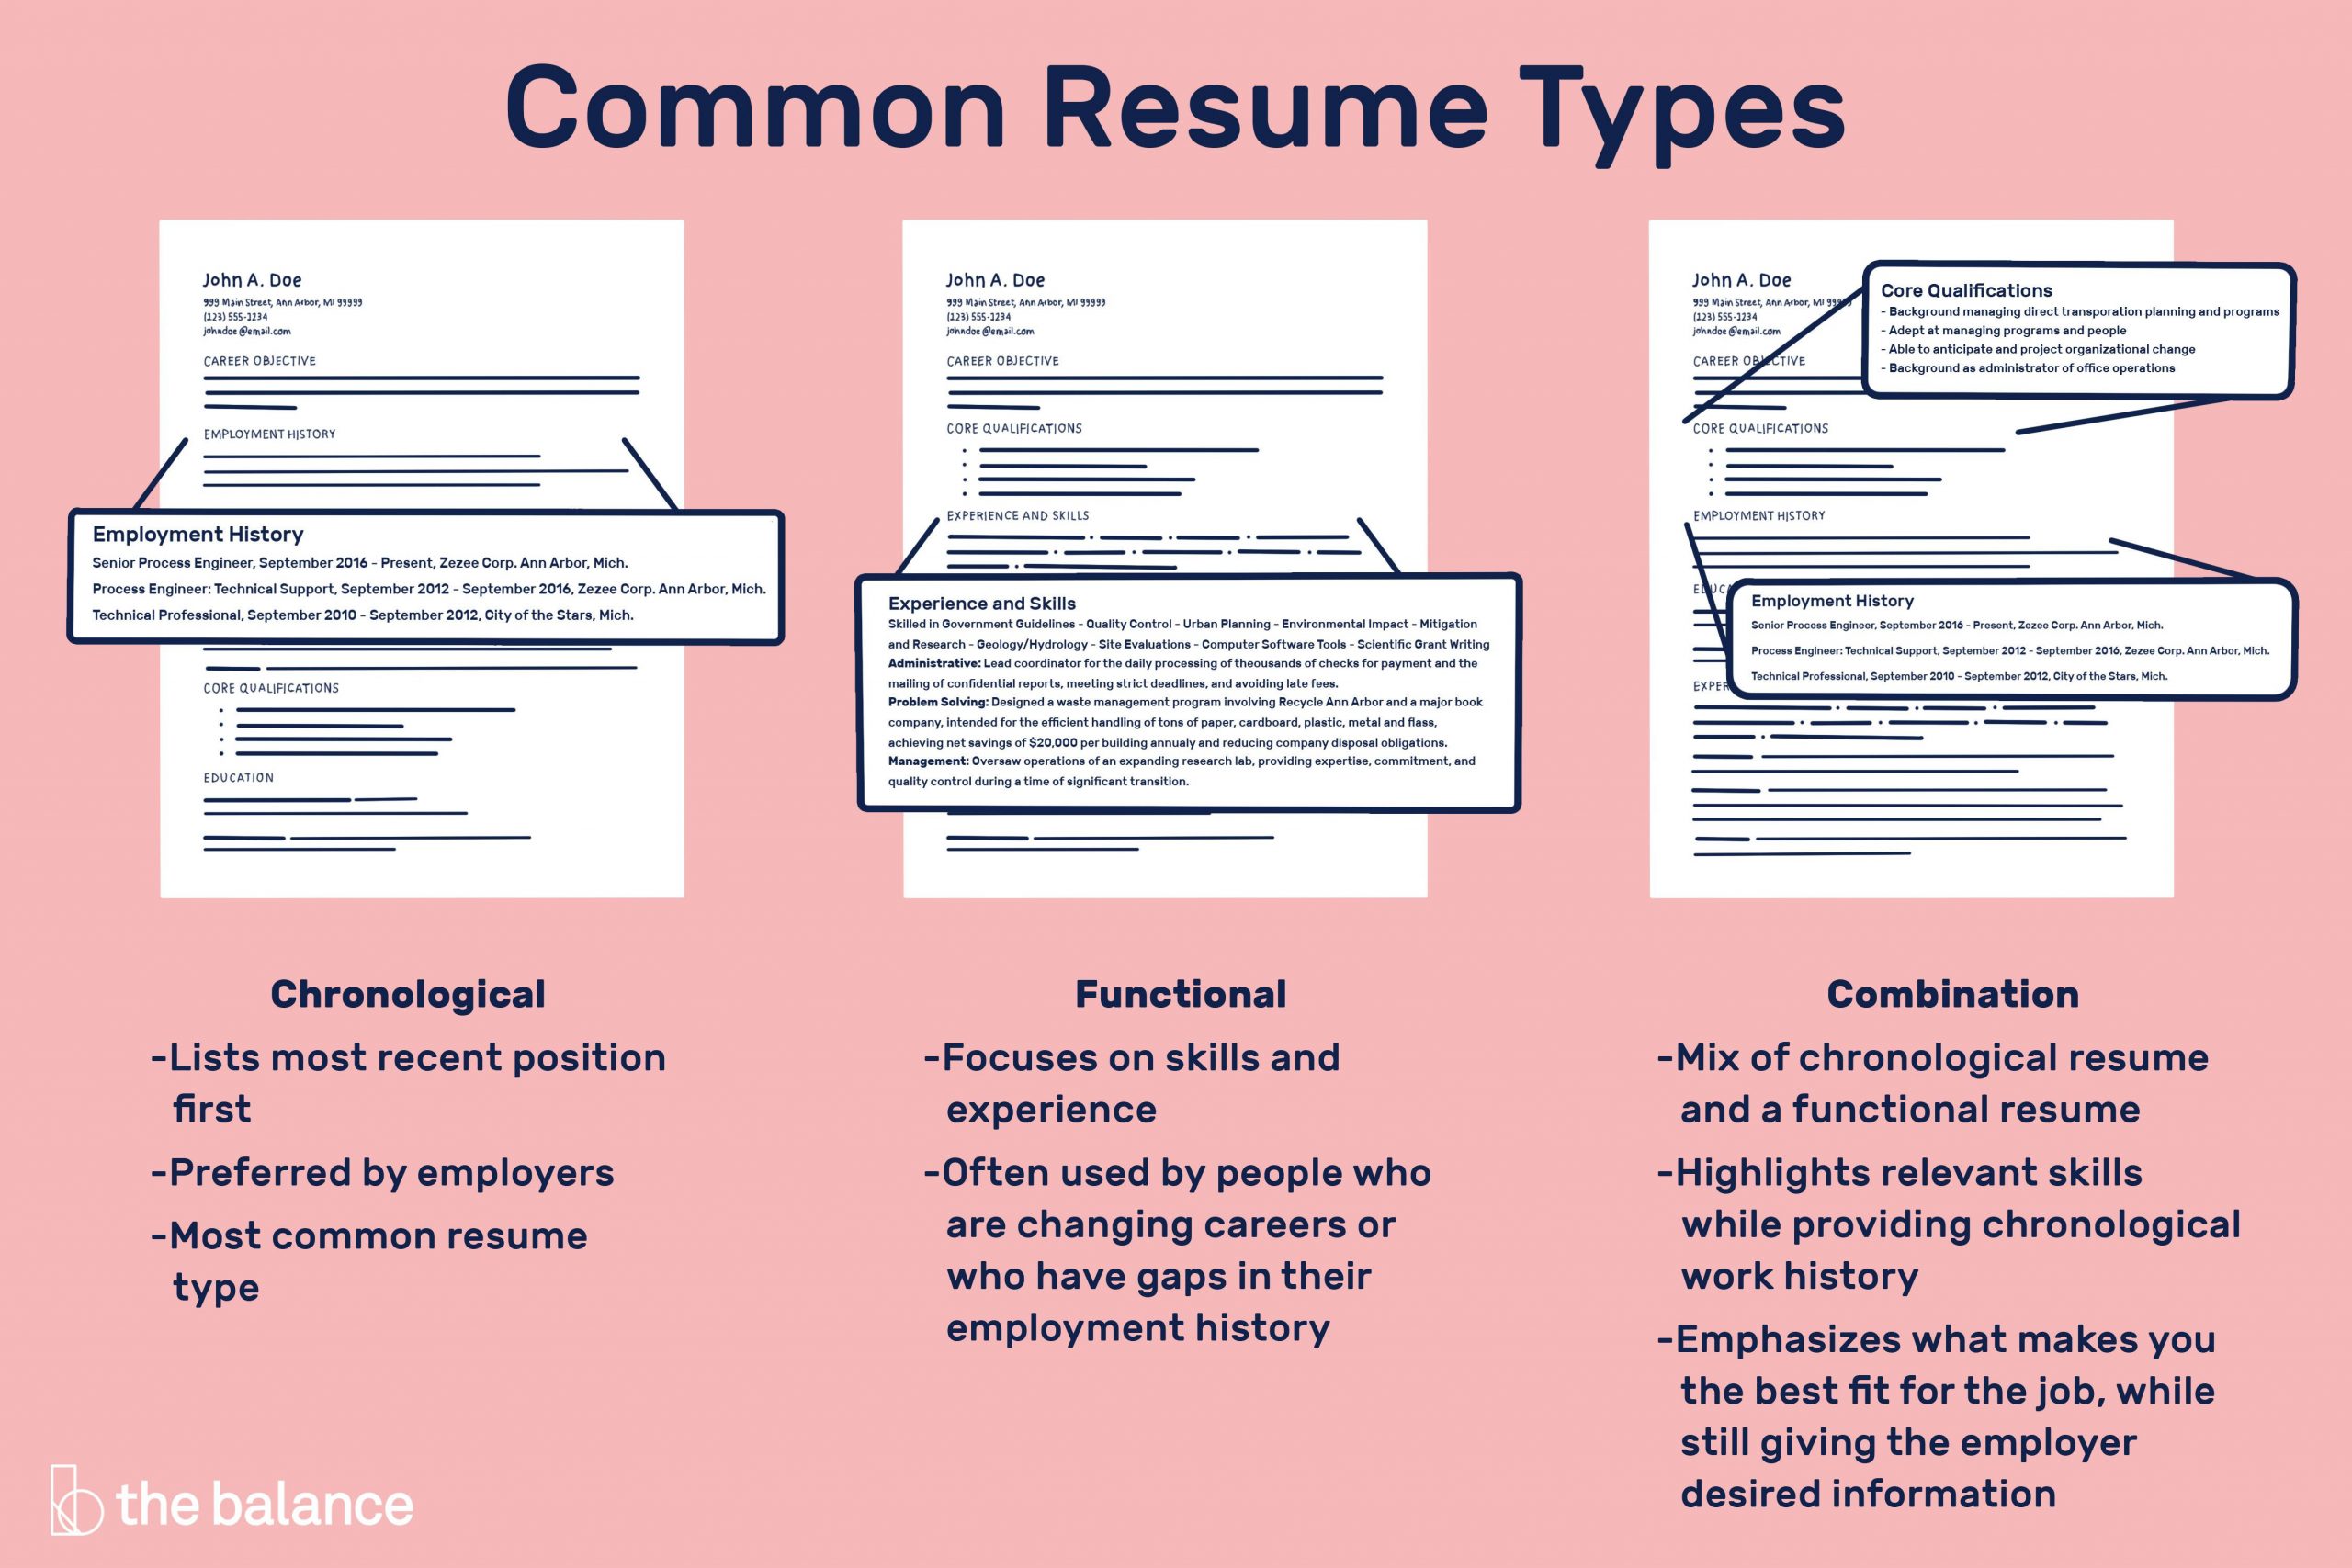 resume types chronological functional bination